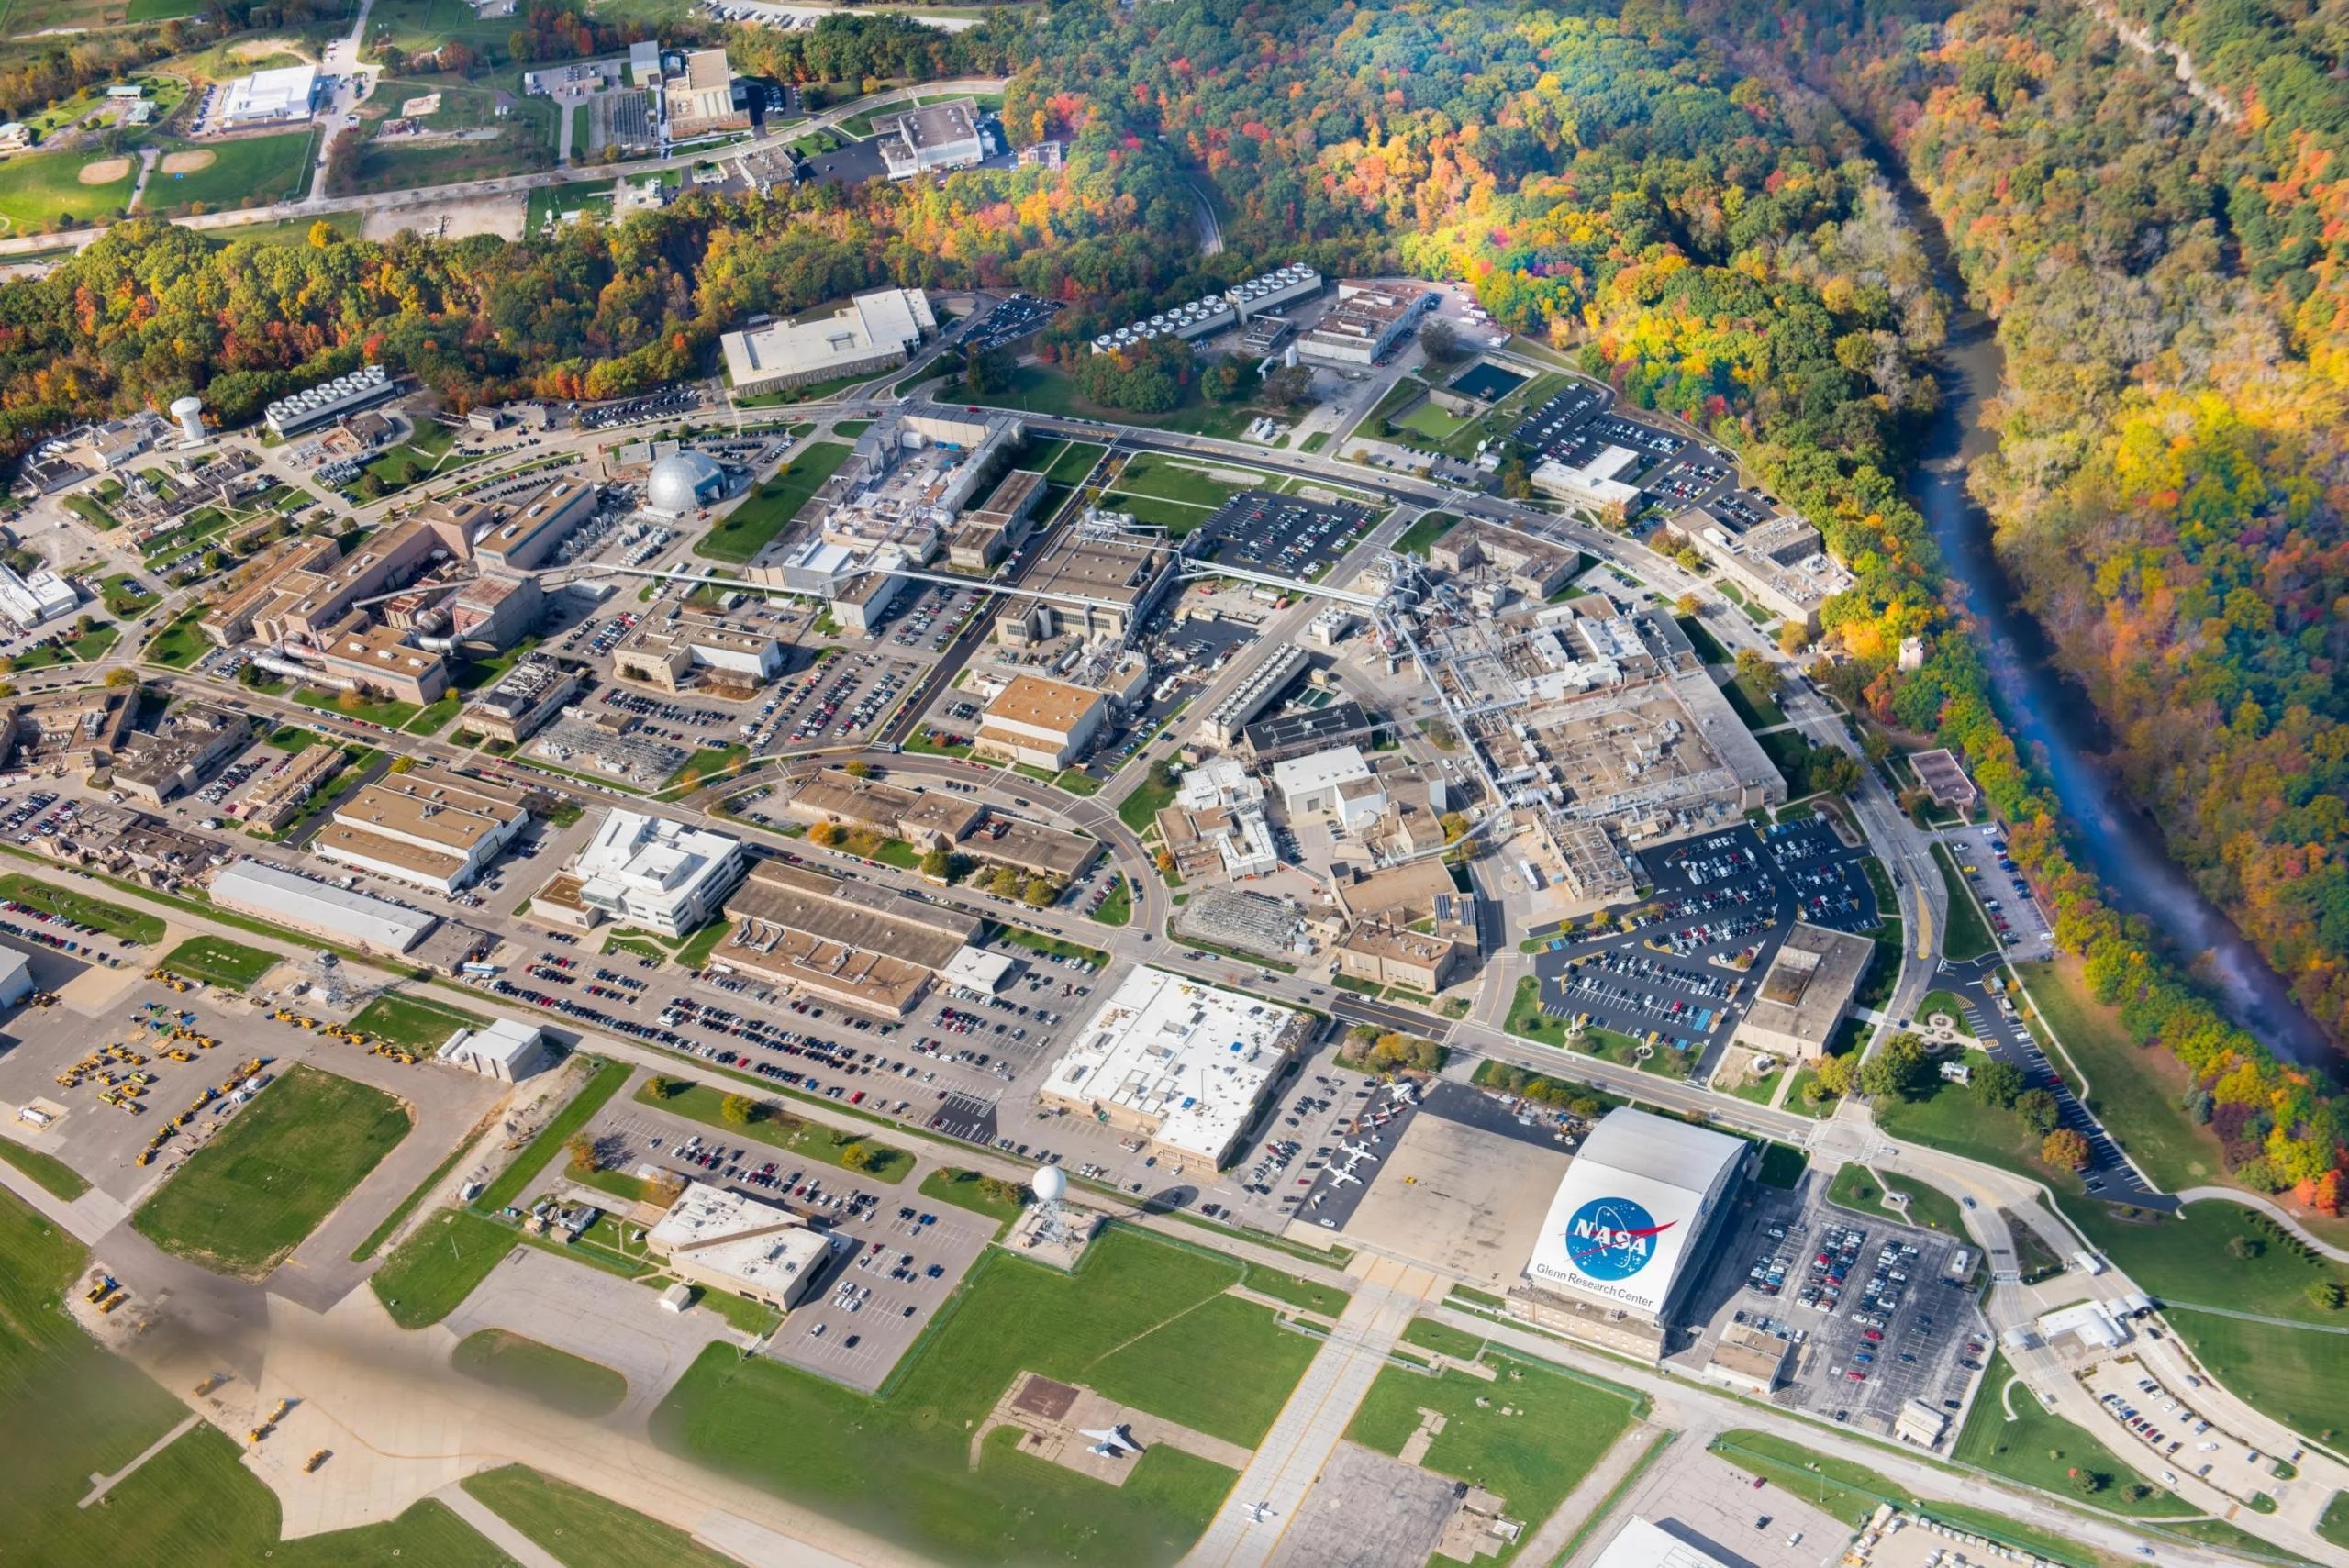 Vista aérea del Centro Glenn de la NASA